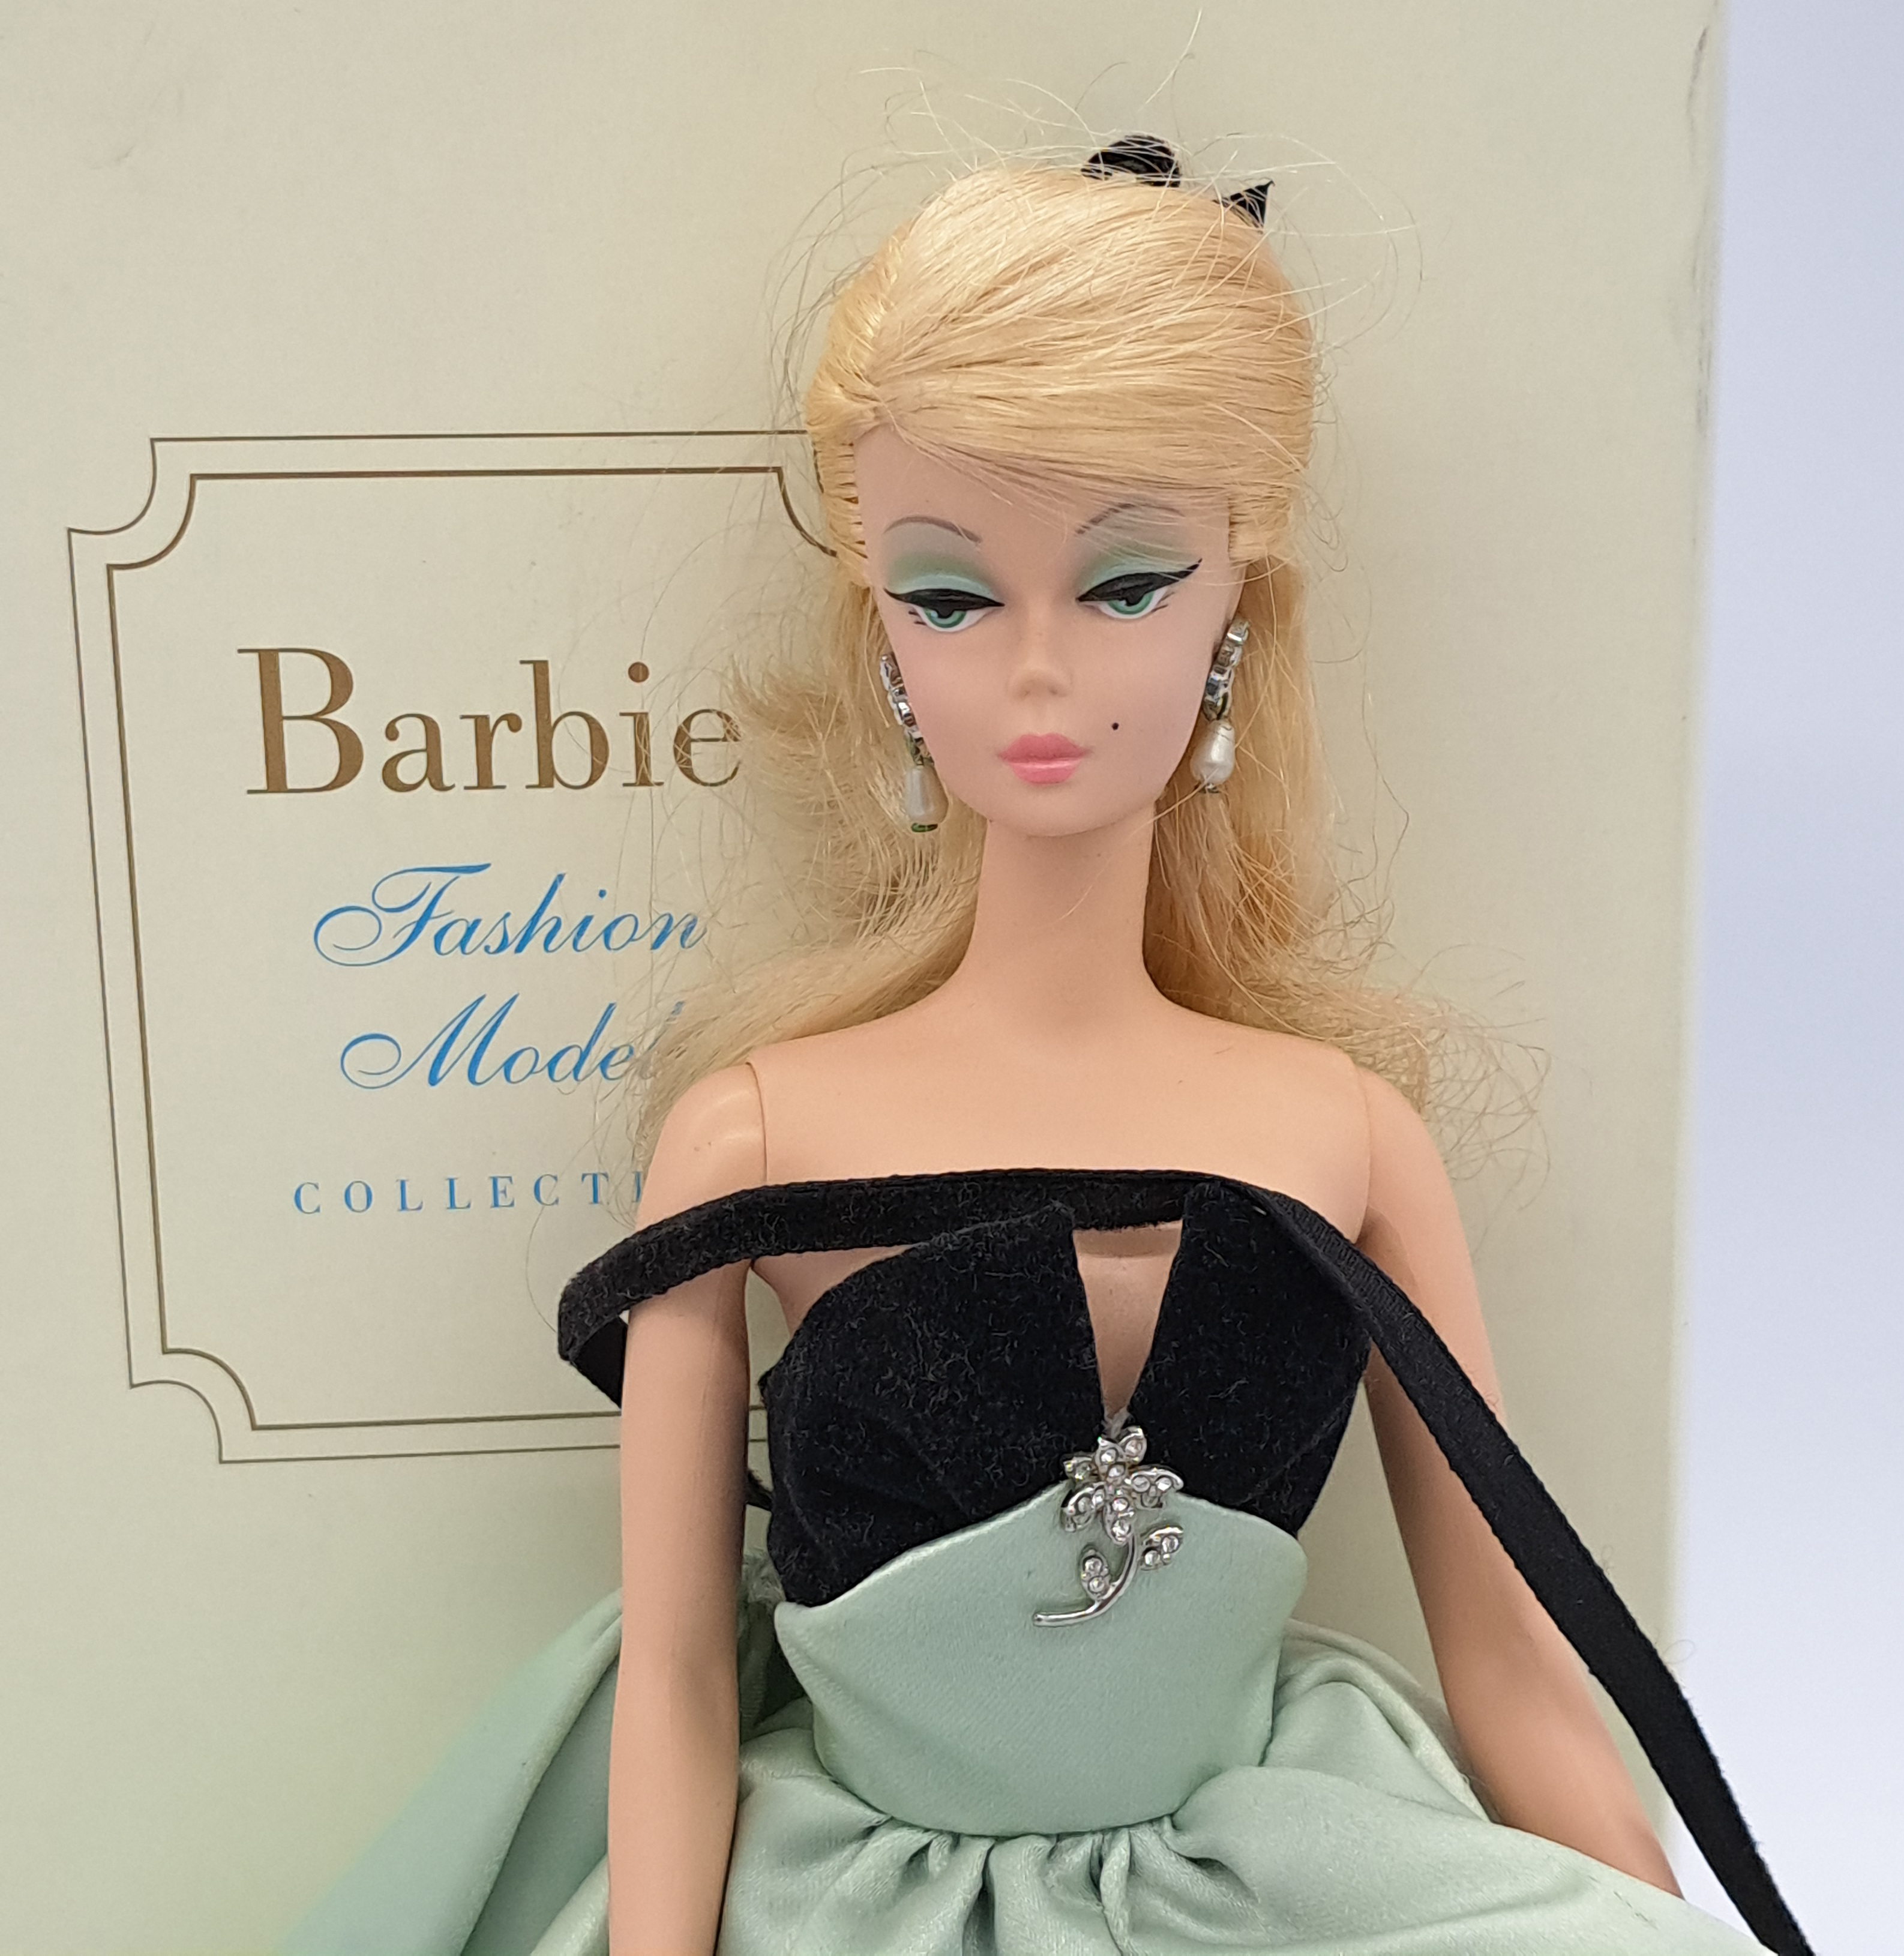 Mattel Barbie Silkstone, Lisette, Fashion Model Collection - Image 2 of 2